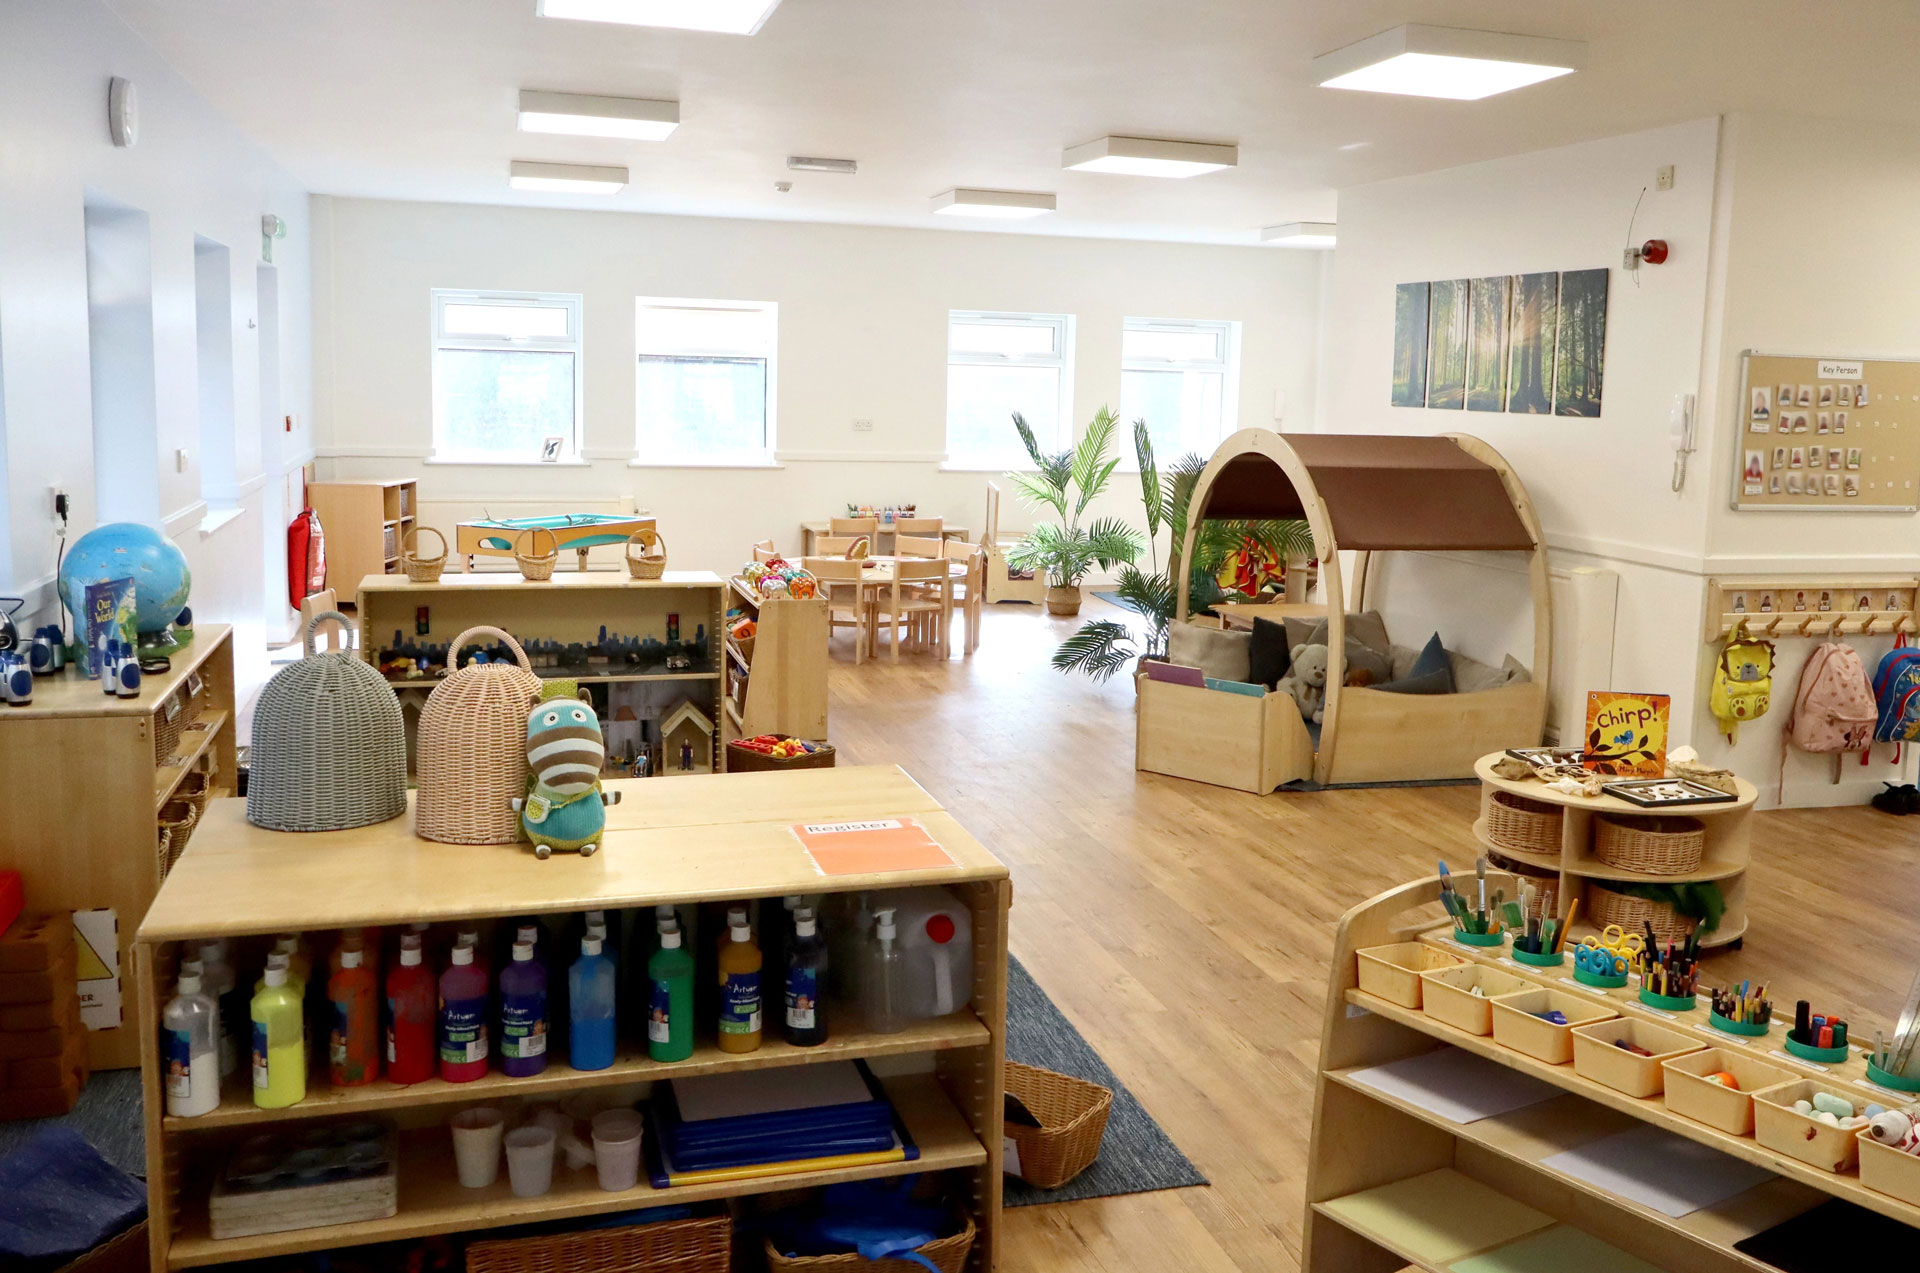 Englefield Green Nursery and Preschool